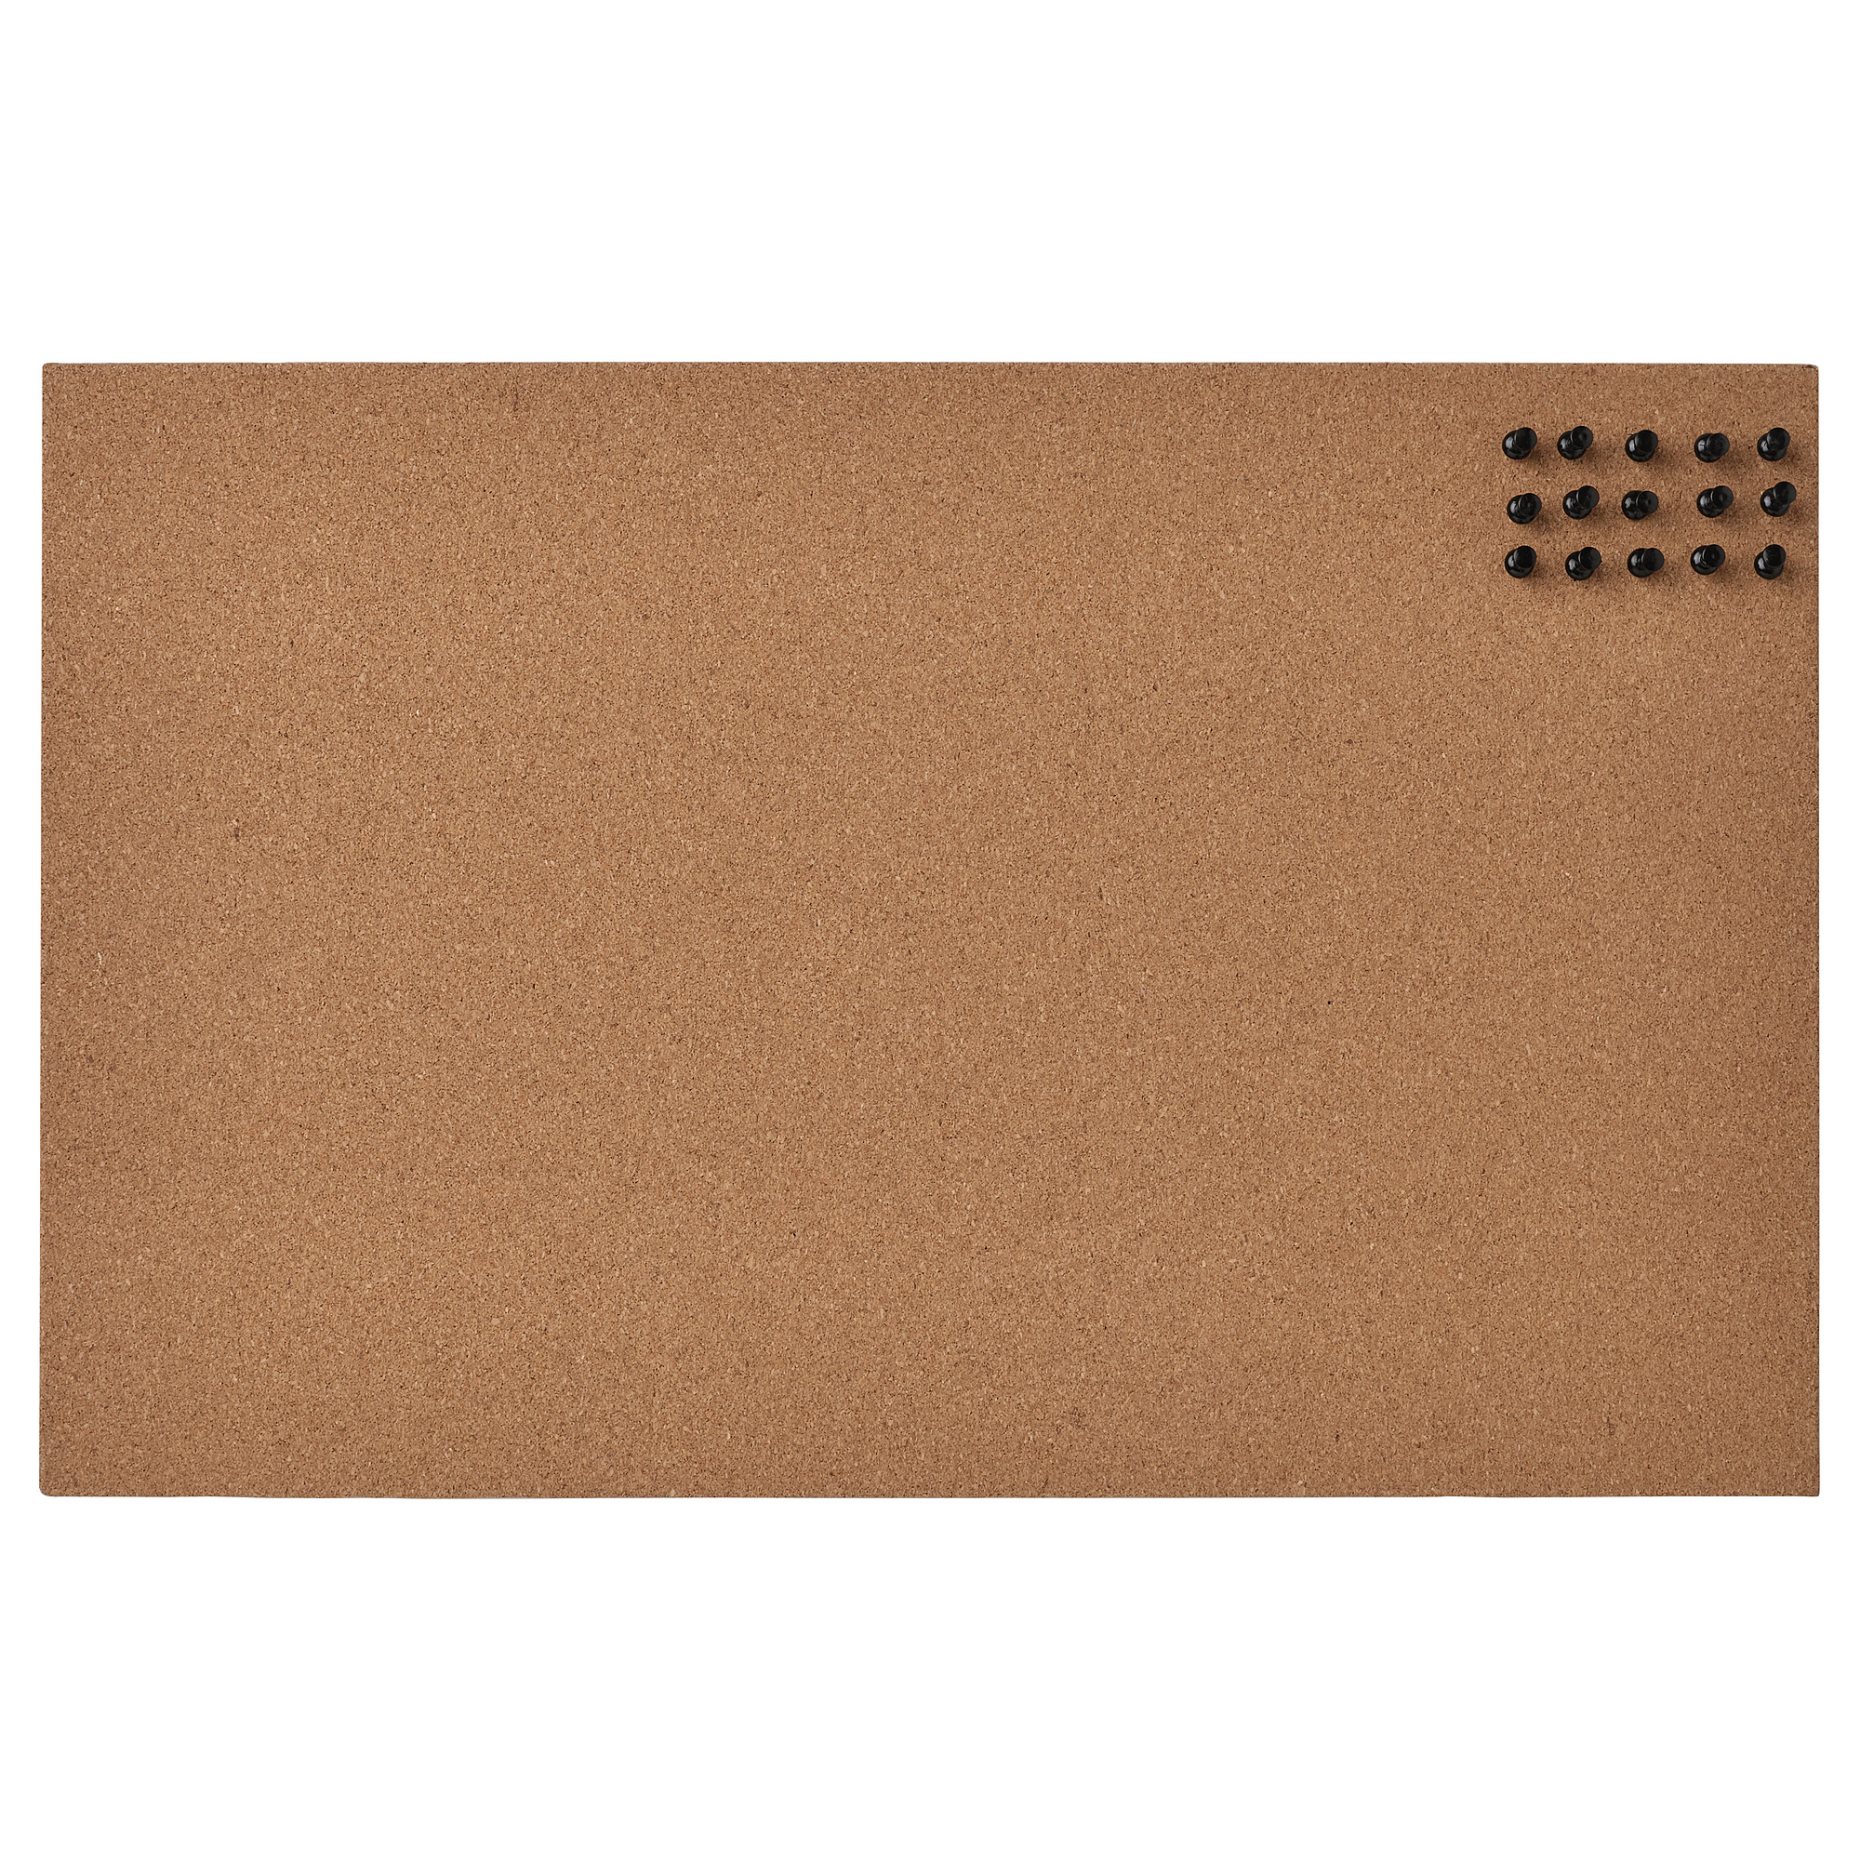 FLÖNSA, memo board with pins, 52x33 cm, 605.324.68